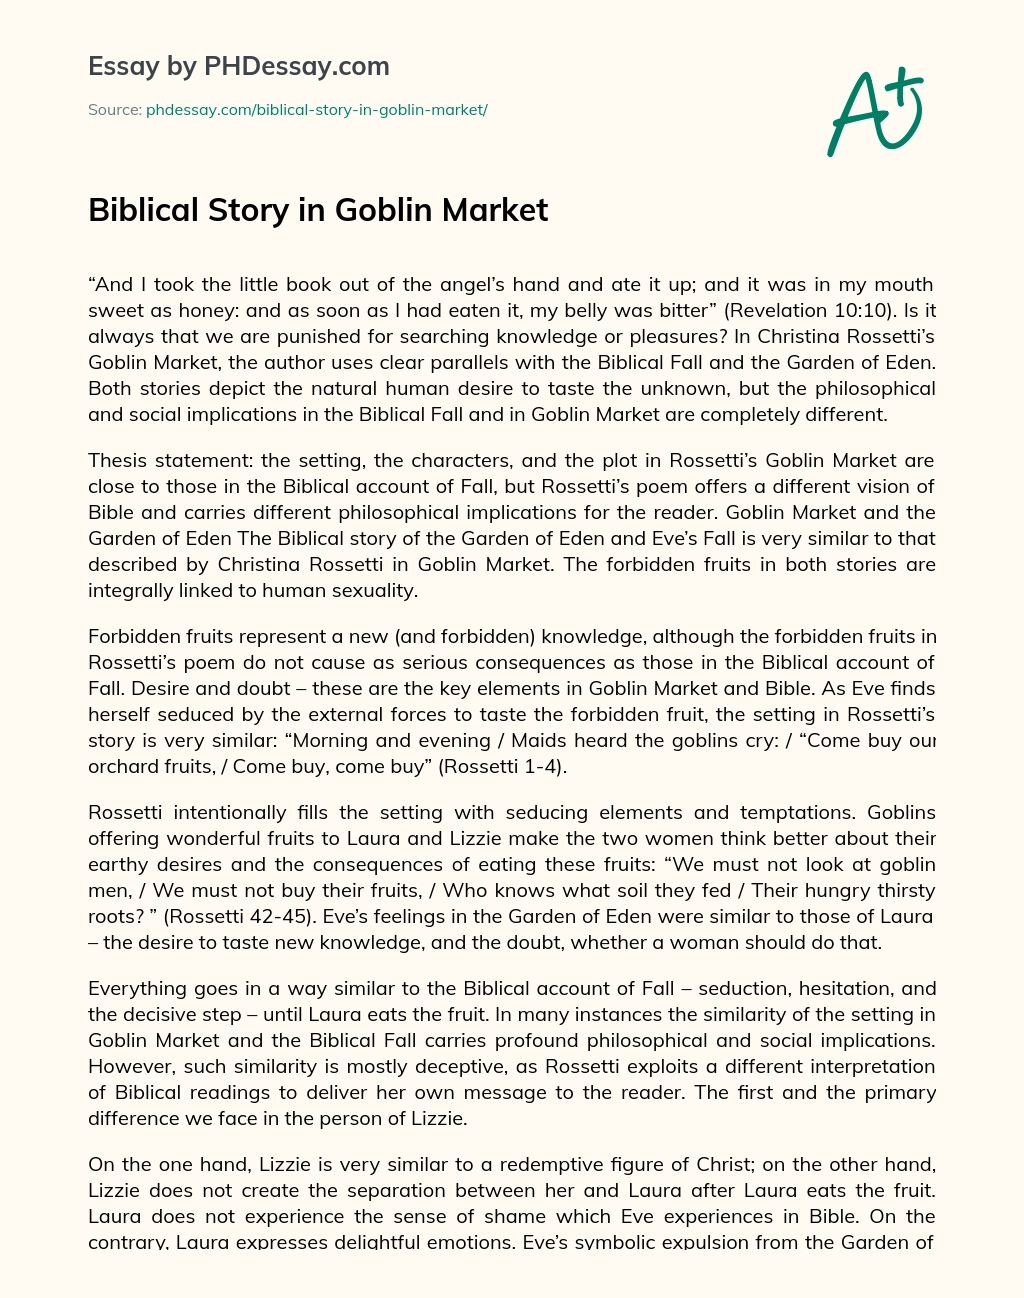 Biblical Story in Goblin Market essay